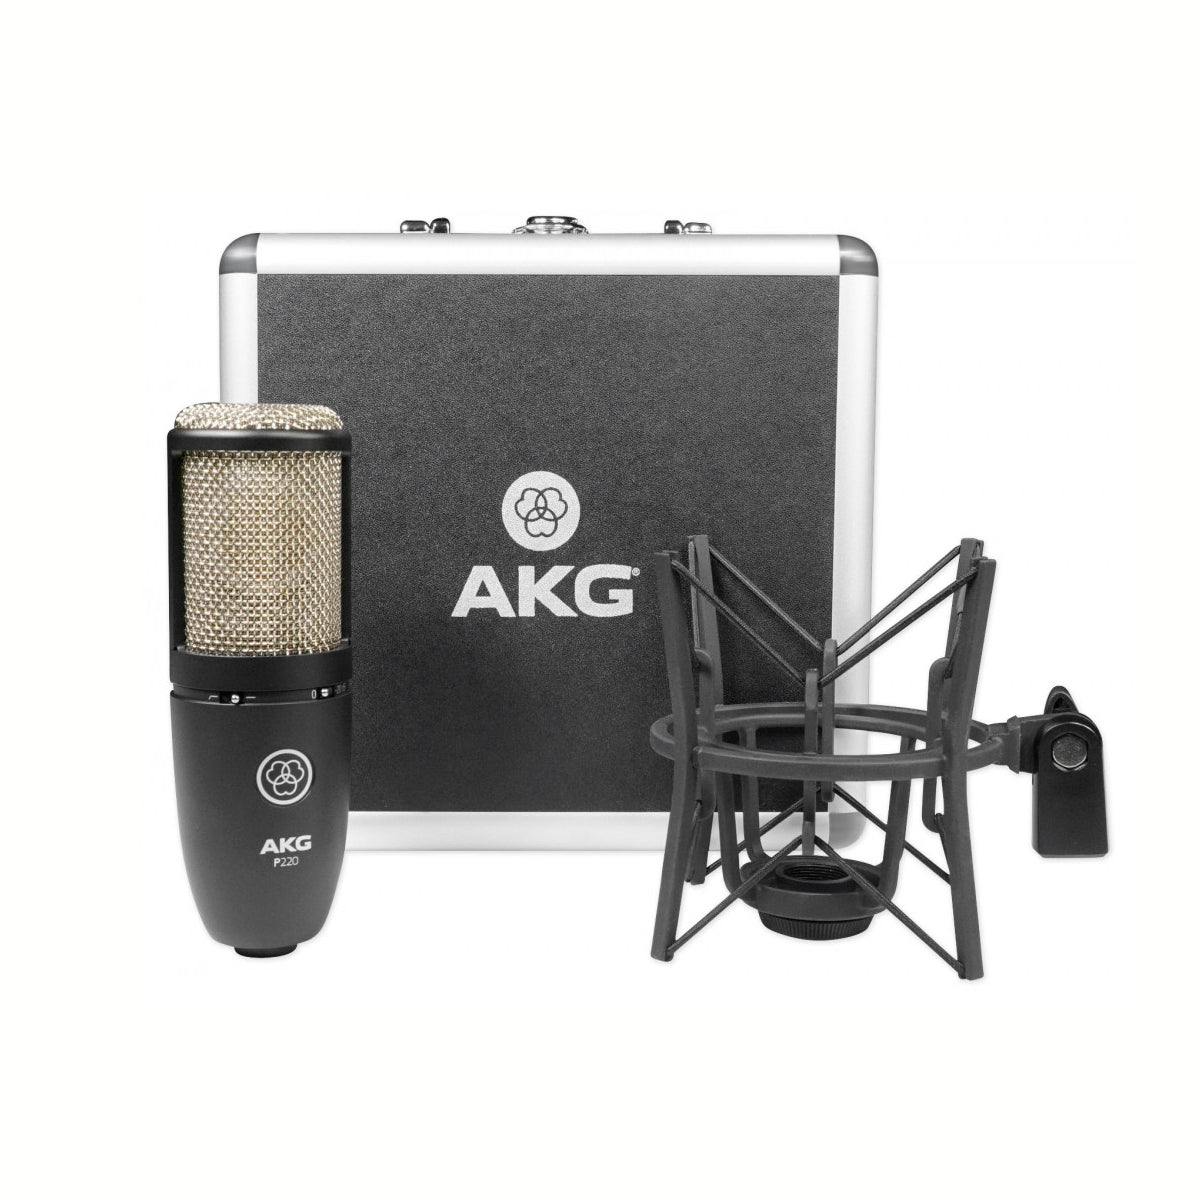 AKG P220 Professional Studio Condenser Microphone